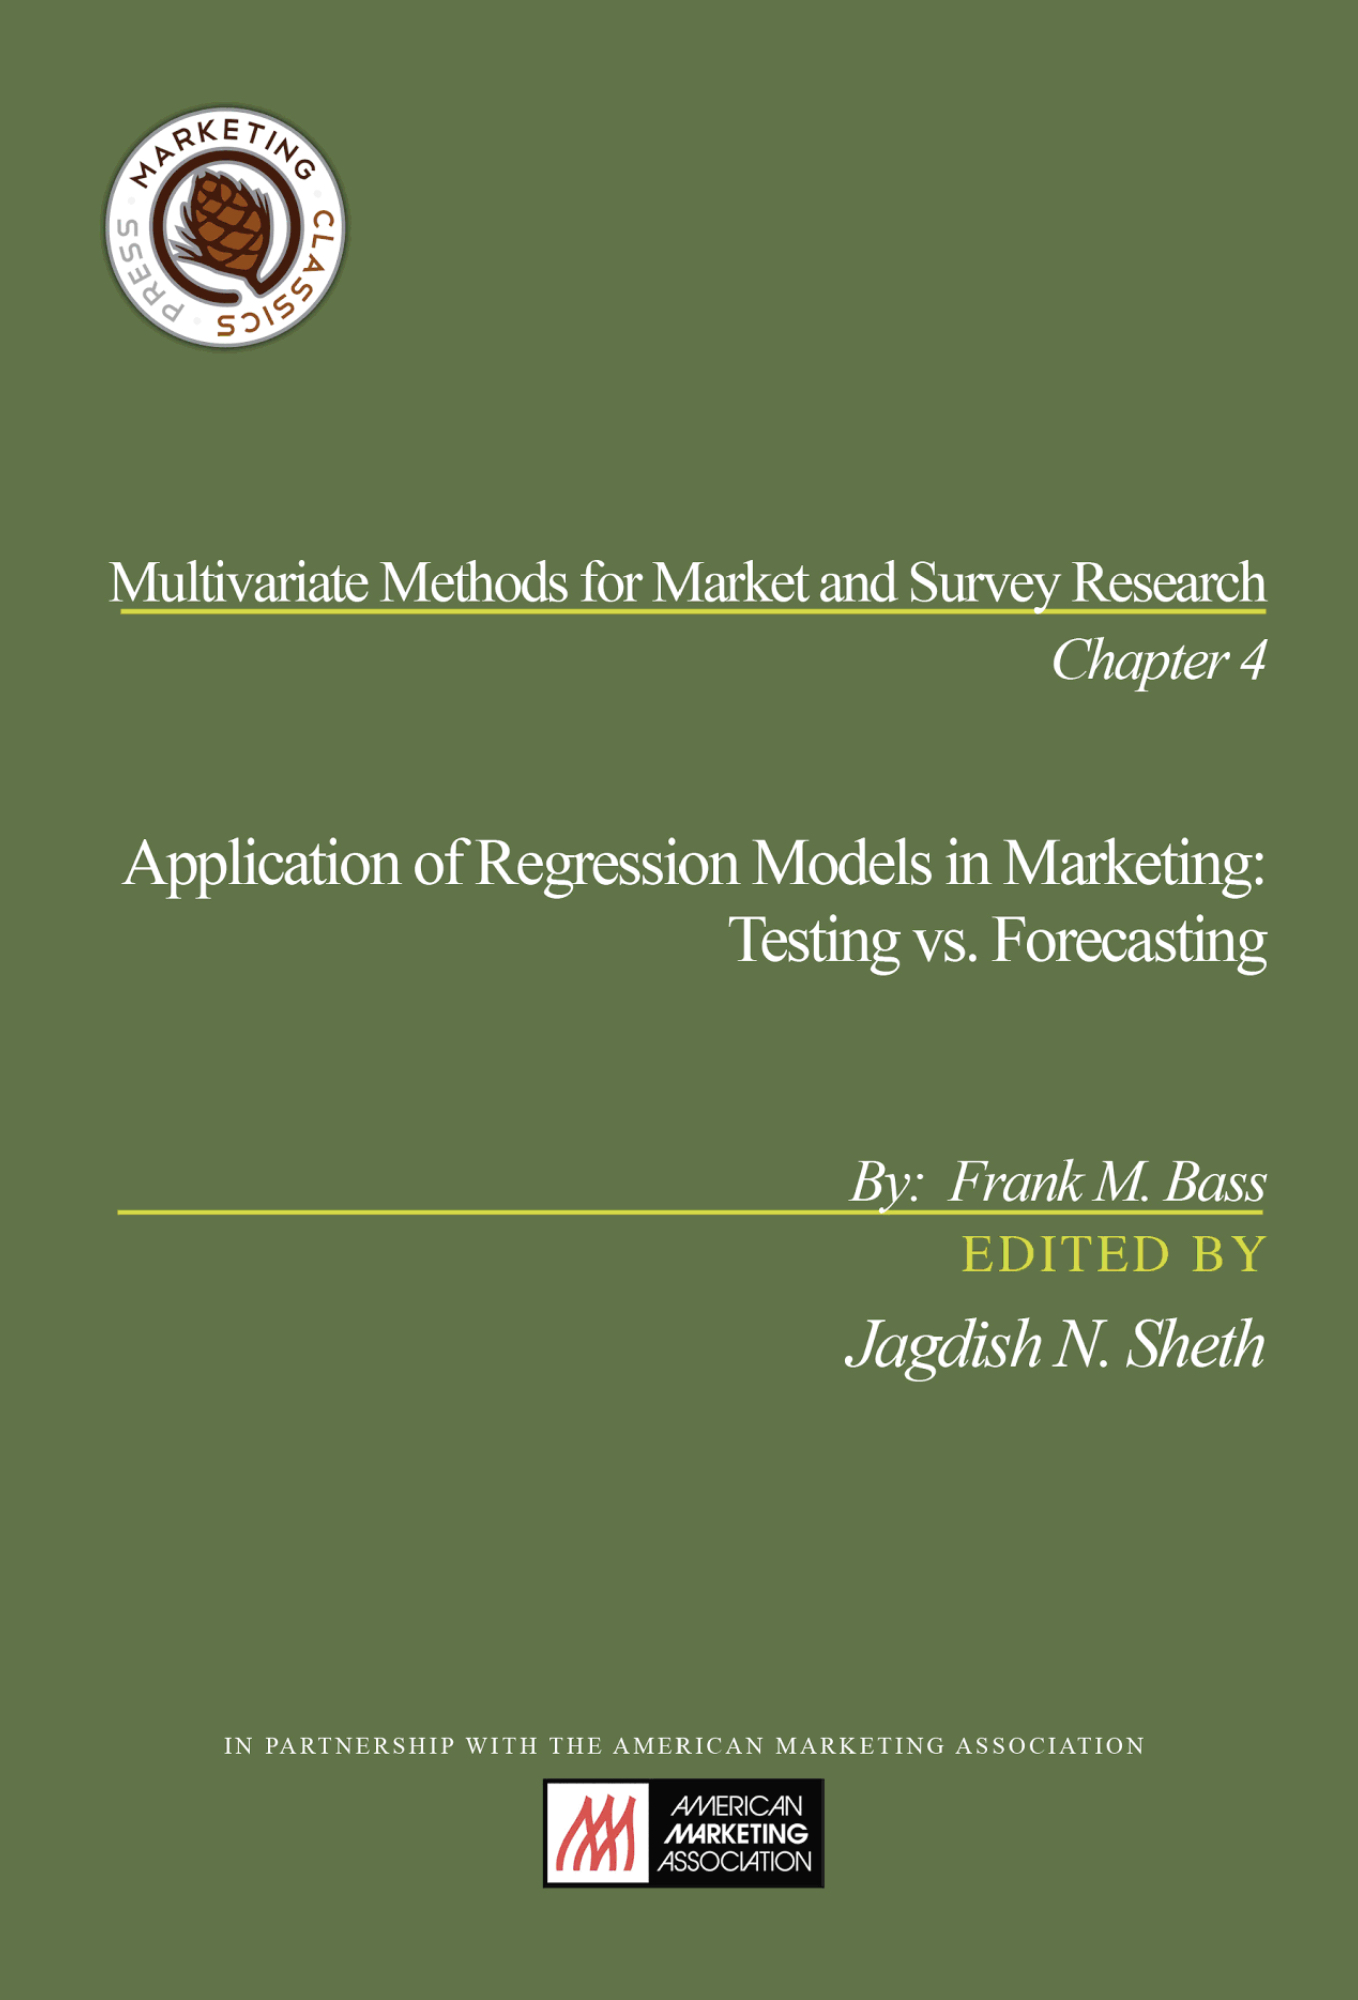 Application of Regression Models in Marketing: Testing vs. Forecasting